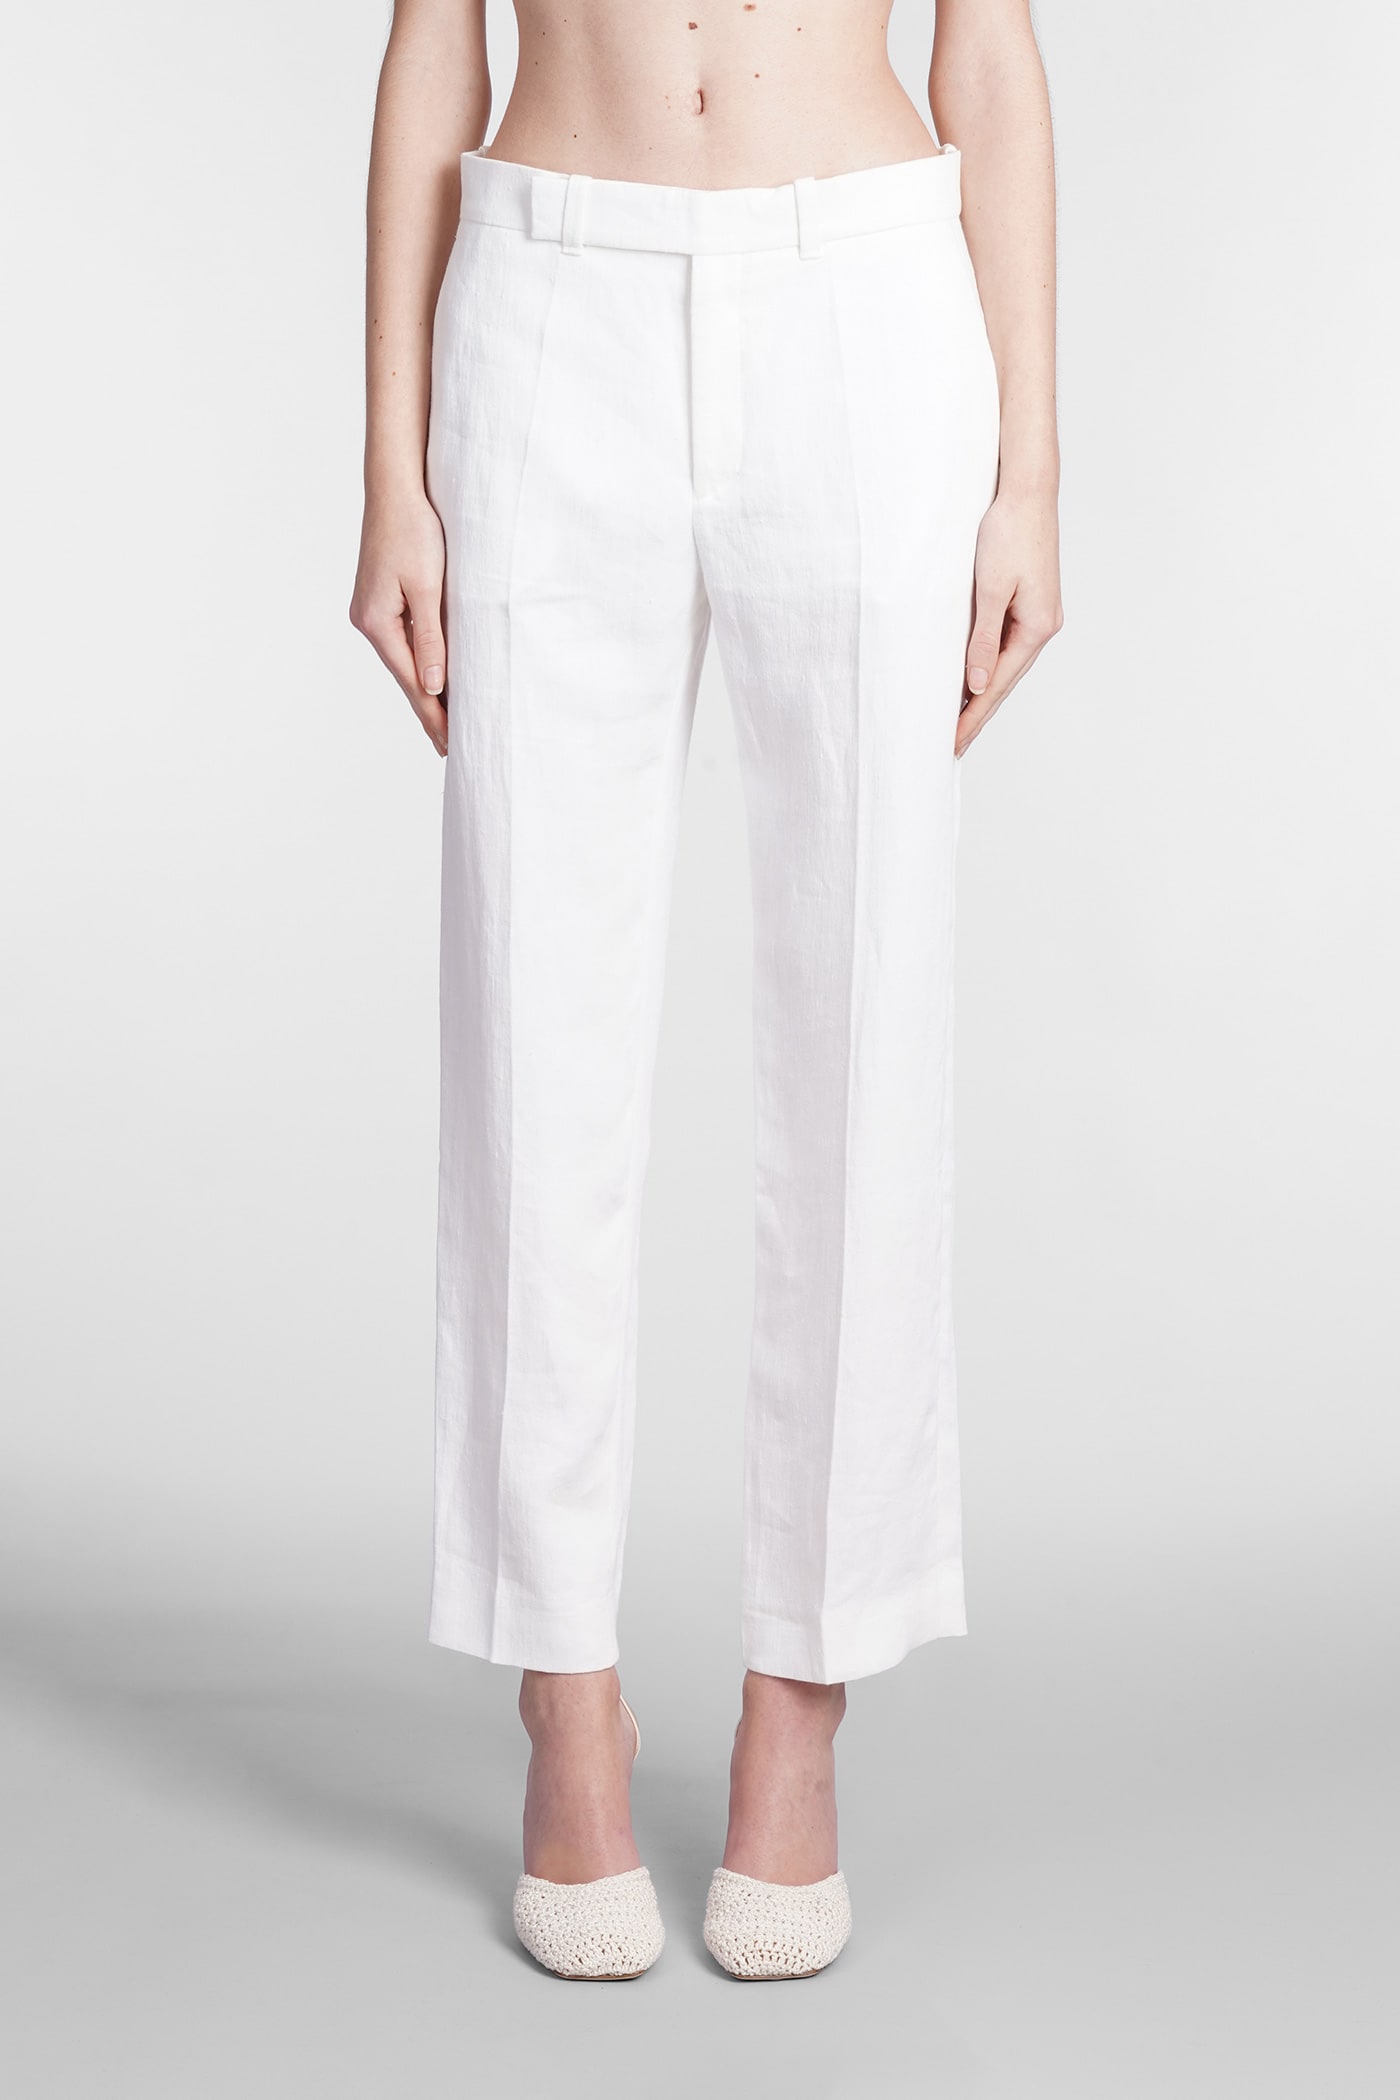 Chloé Pants In White Wool